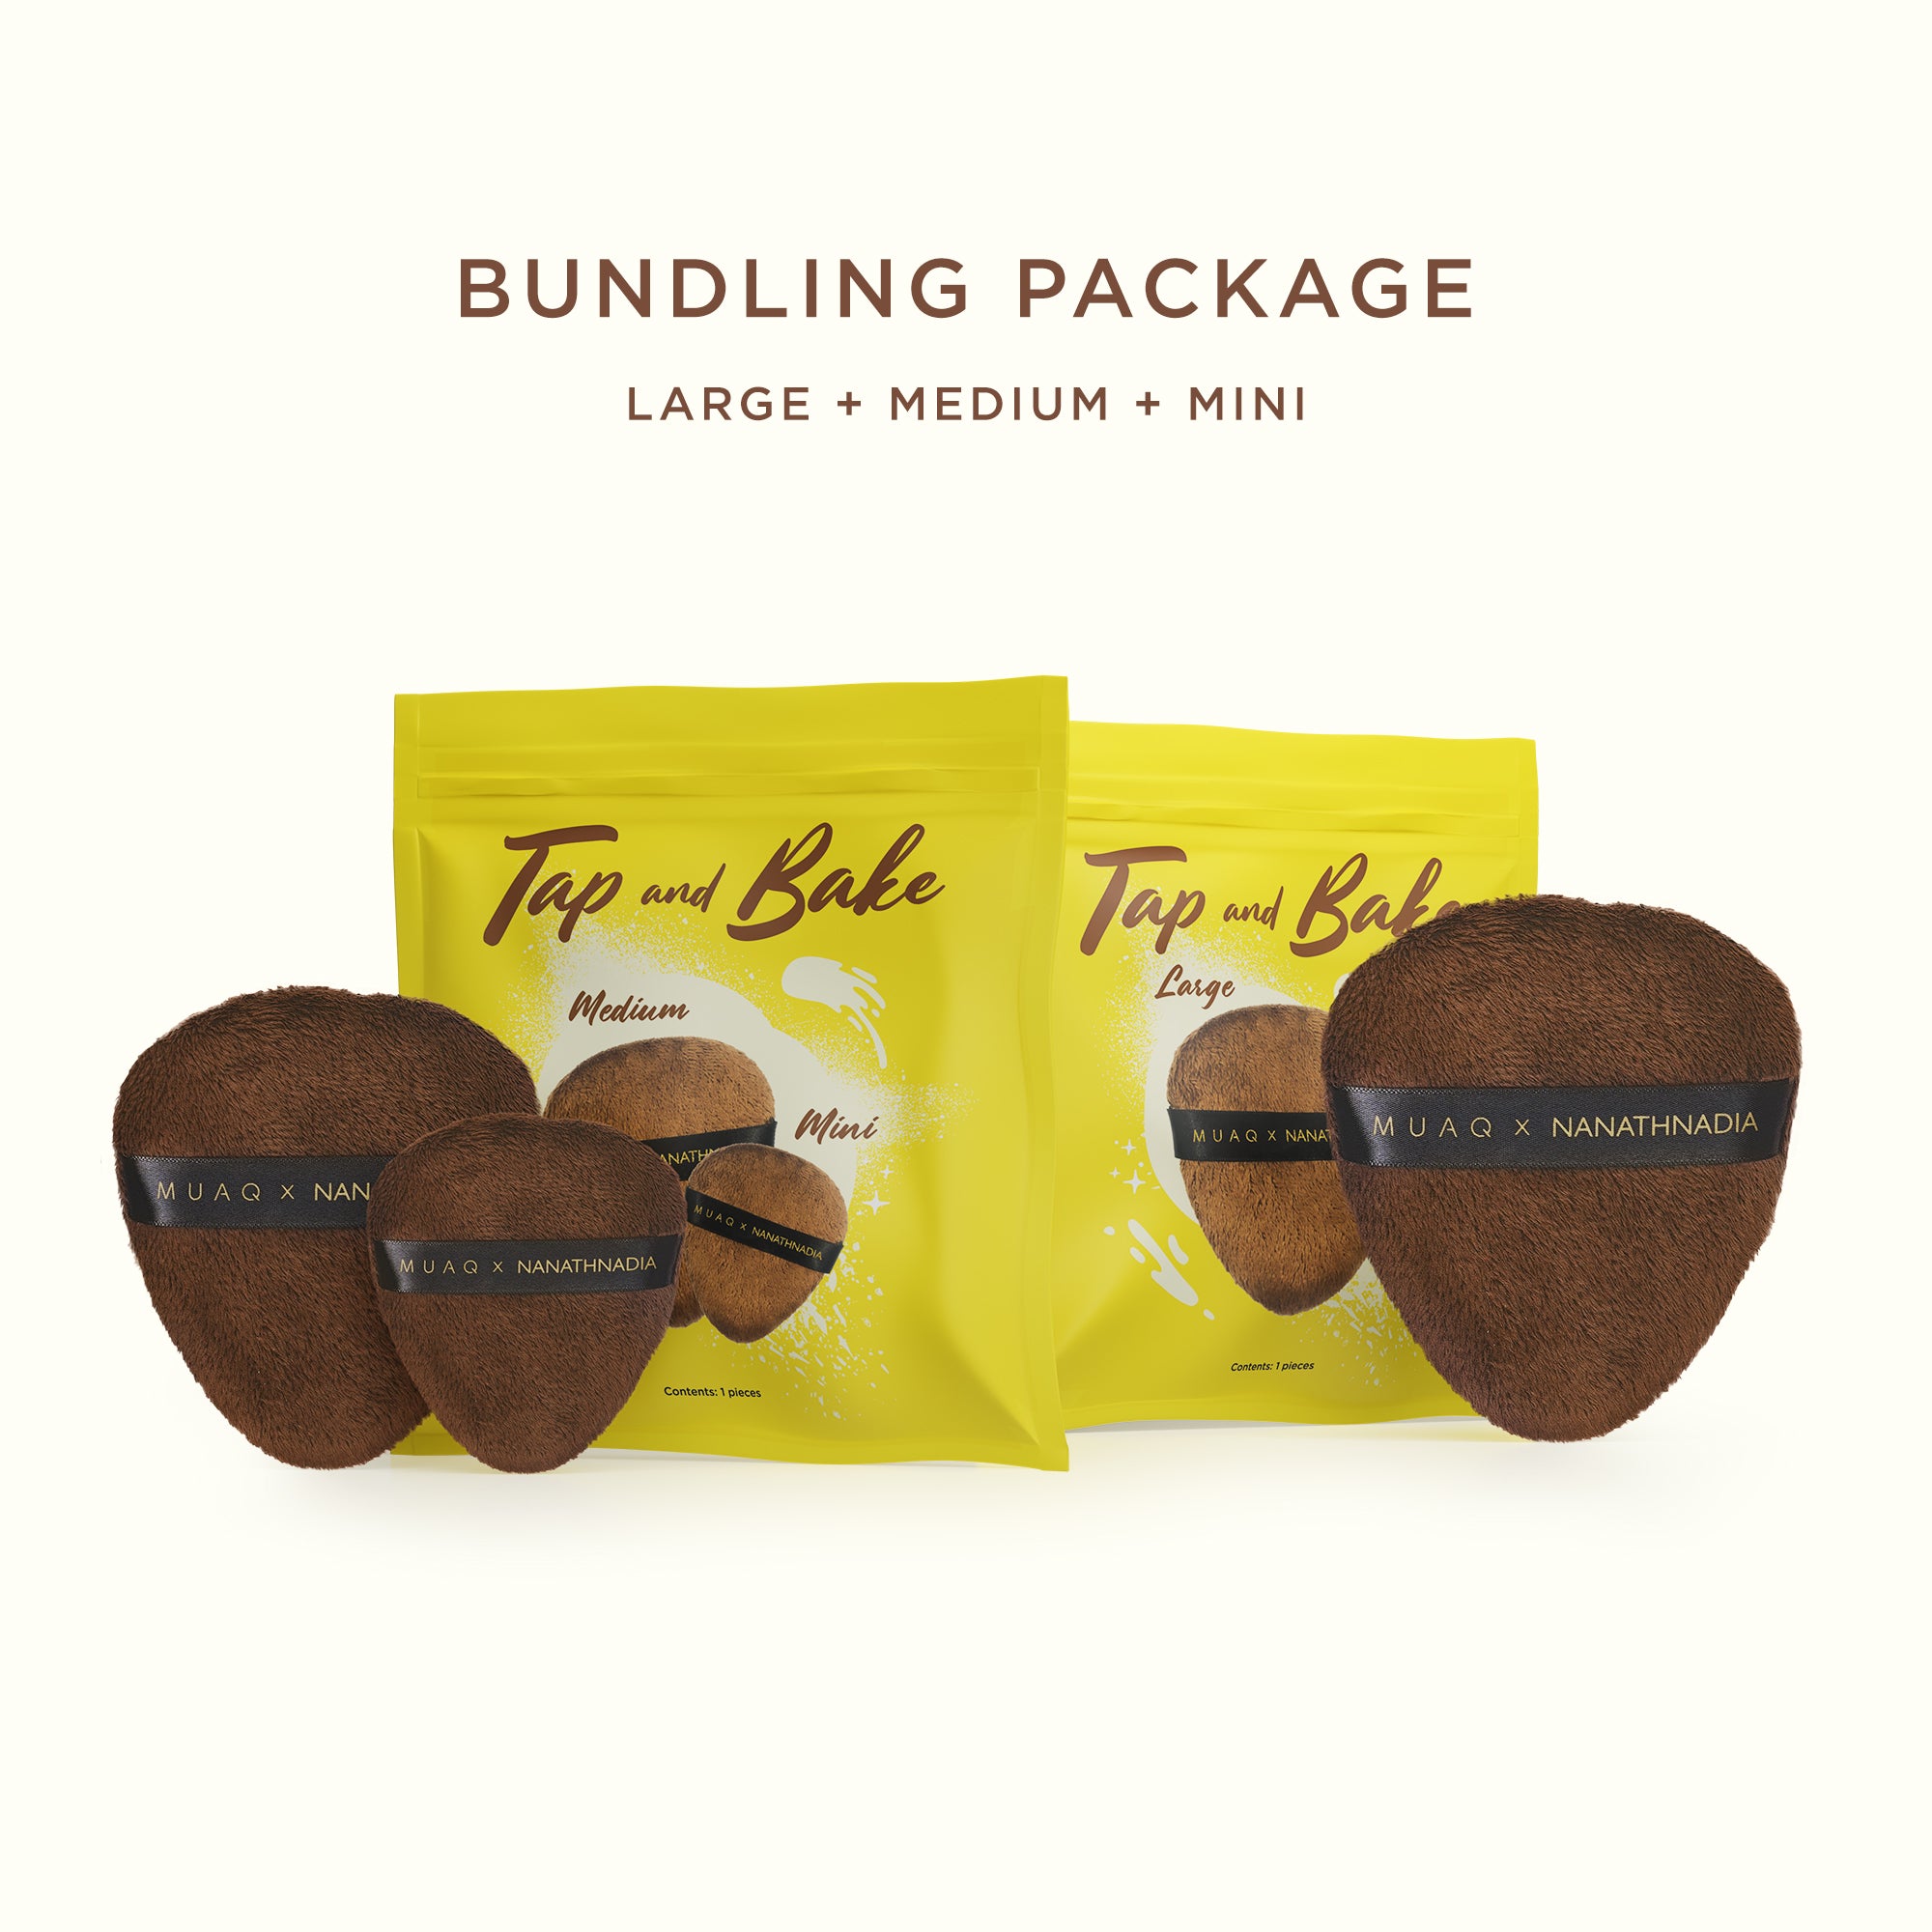 Bundling Package TAP and BAKE by MUAQ X NANATHNADIA (LARGE, MEDIUM MINI)